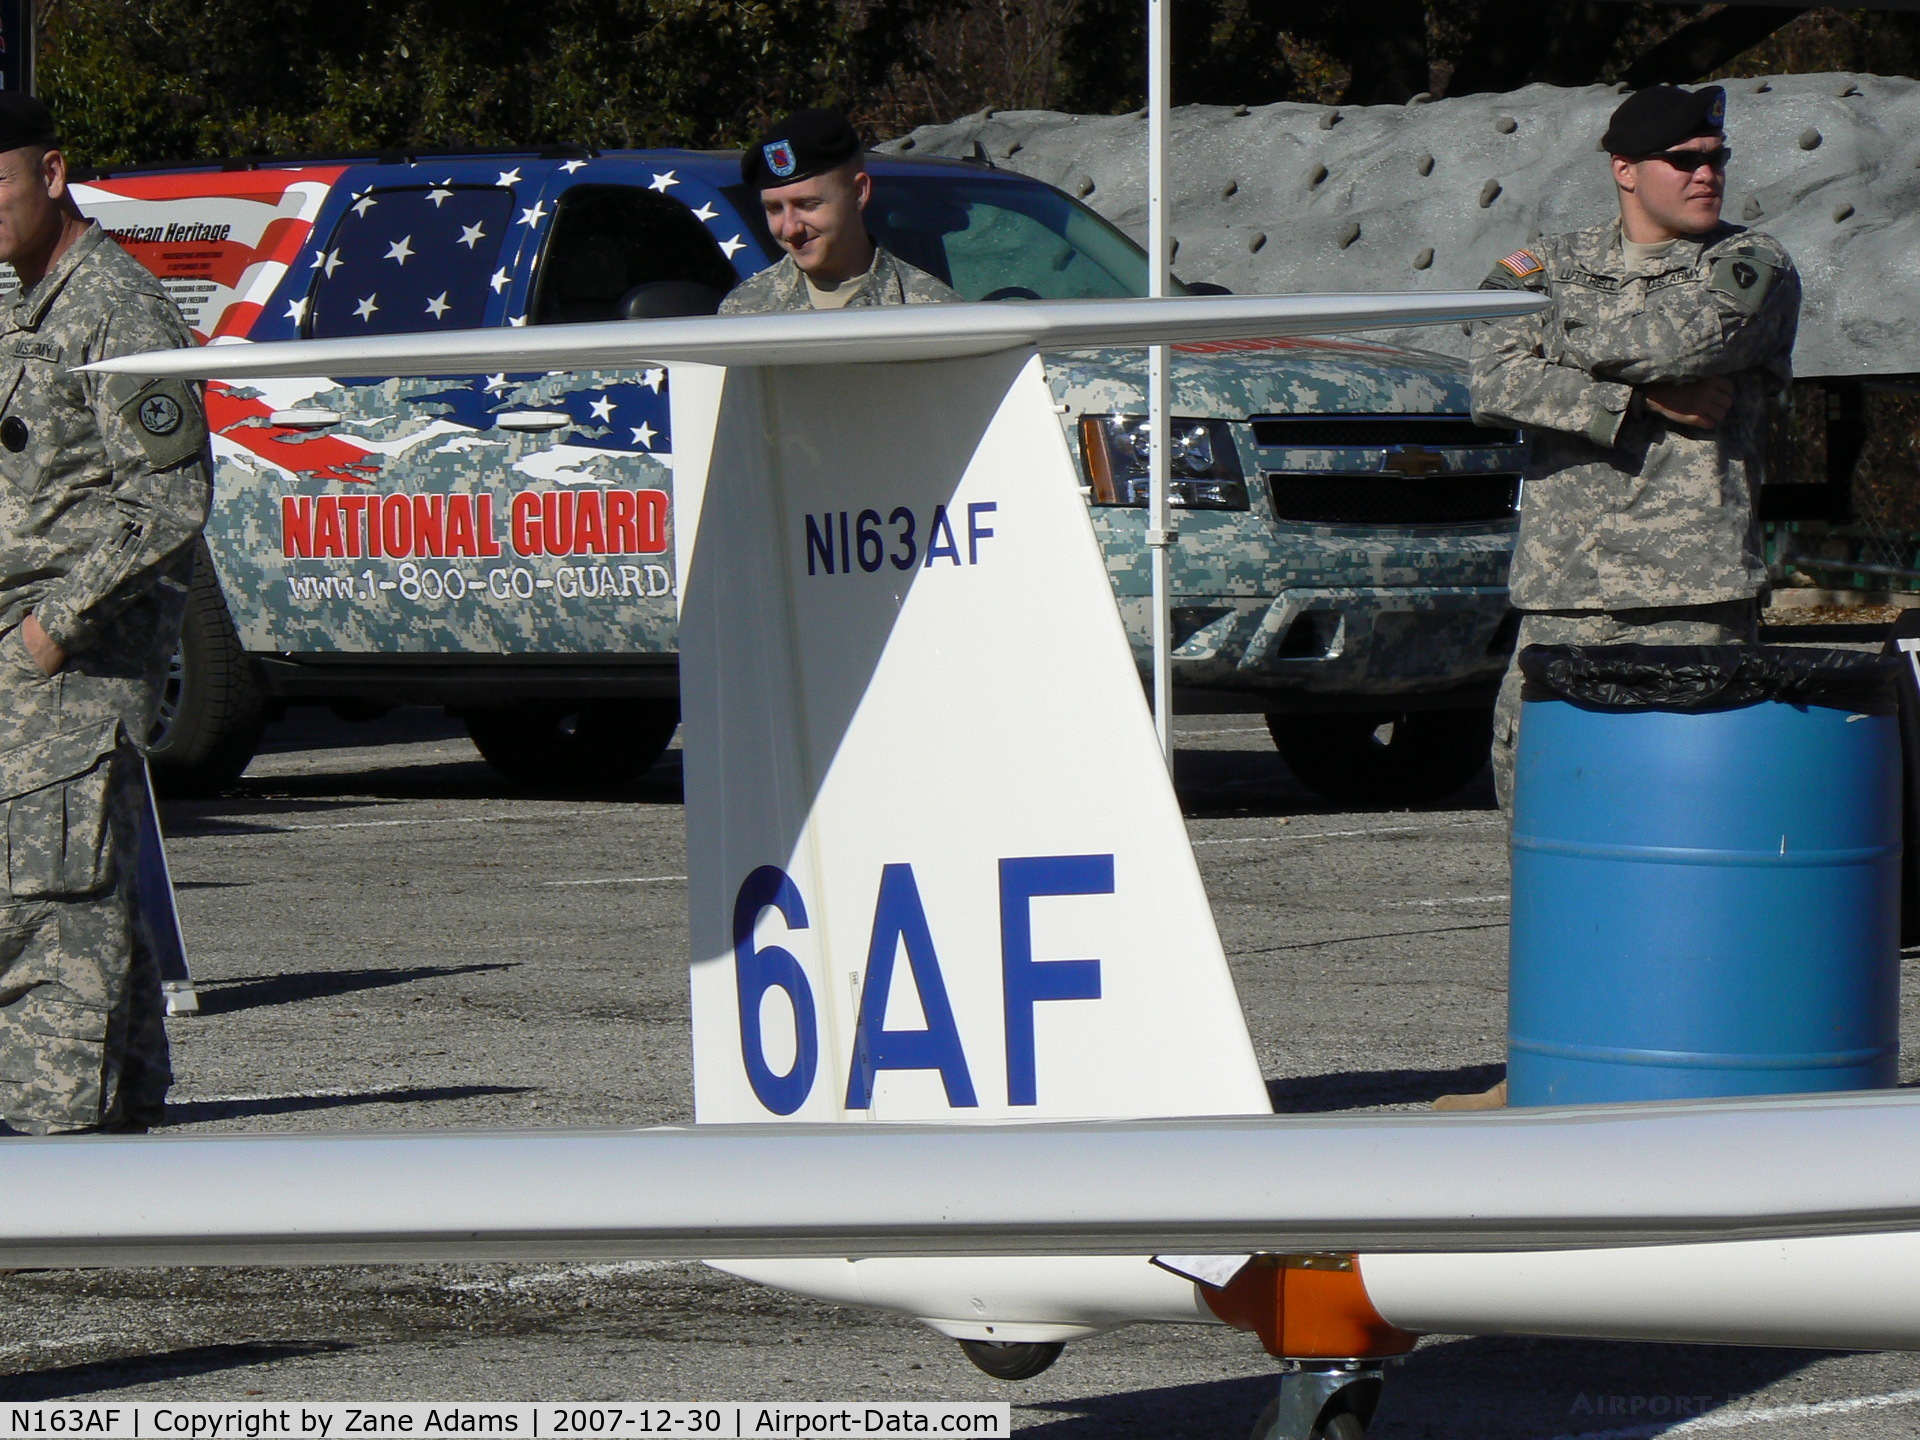 N163AF, 2003 Schempp-Hirth Discus 2b C/N 188, USAF Academy Glider at Texas Christian University - Ft. Worth